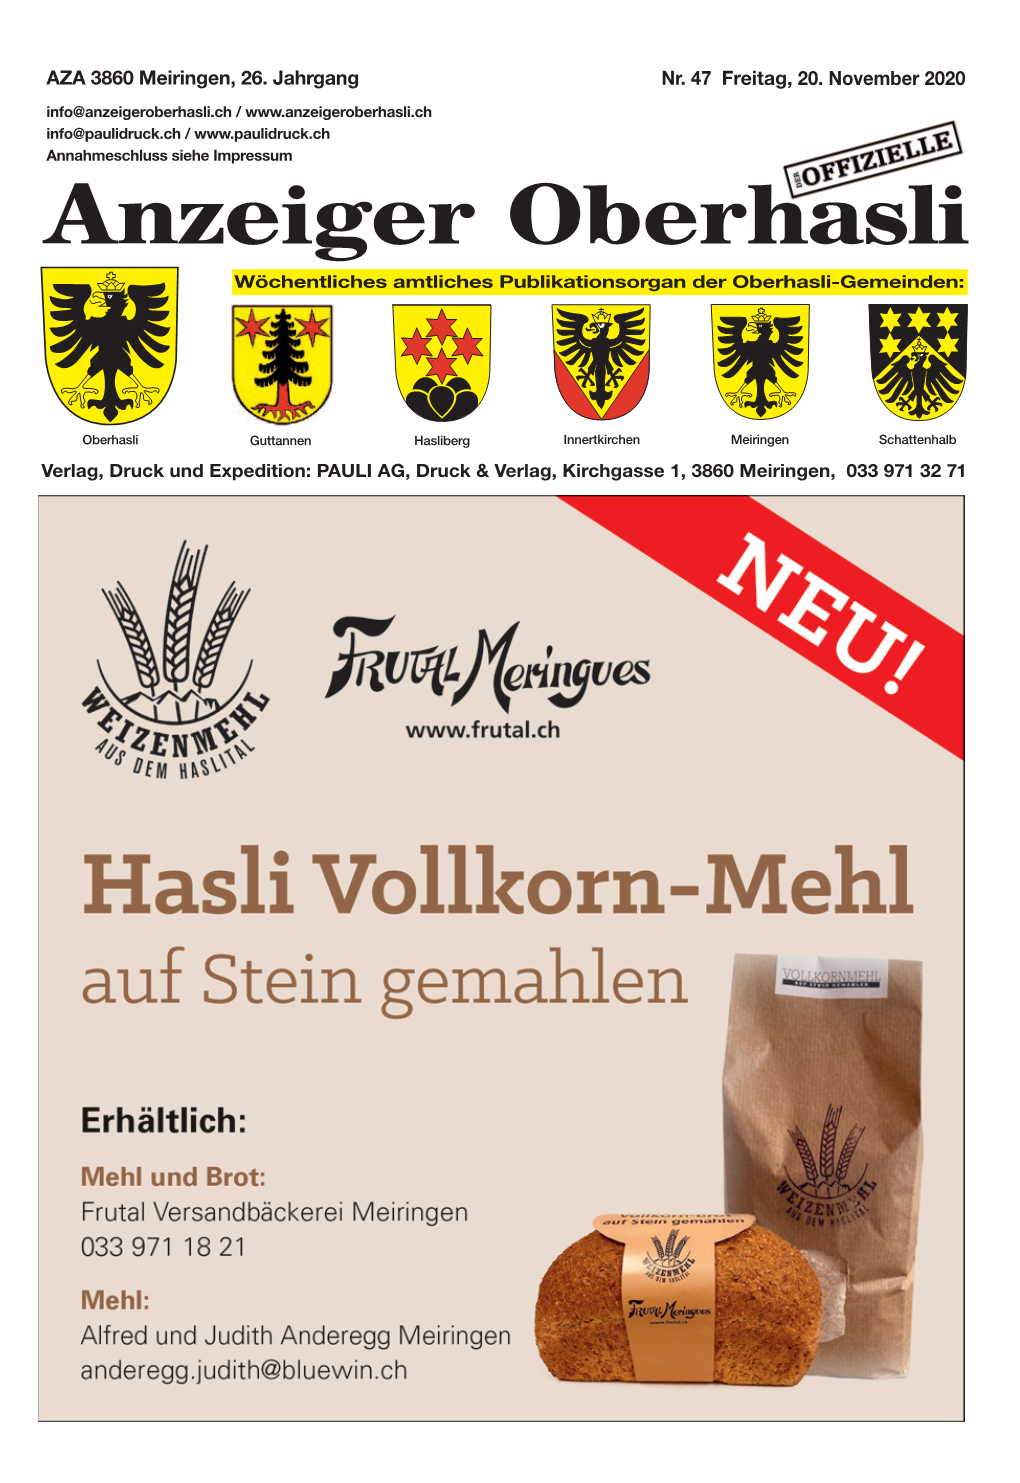 Hasliberg Innertkirchen Meiringen Schattenhalb Verlag, Druck Und Expedition: PAULI AG, Druck & Verlag, Kirchgasse 1, 3860 Meiringen, 033 971 32 71